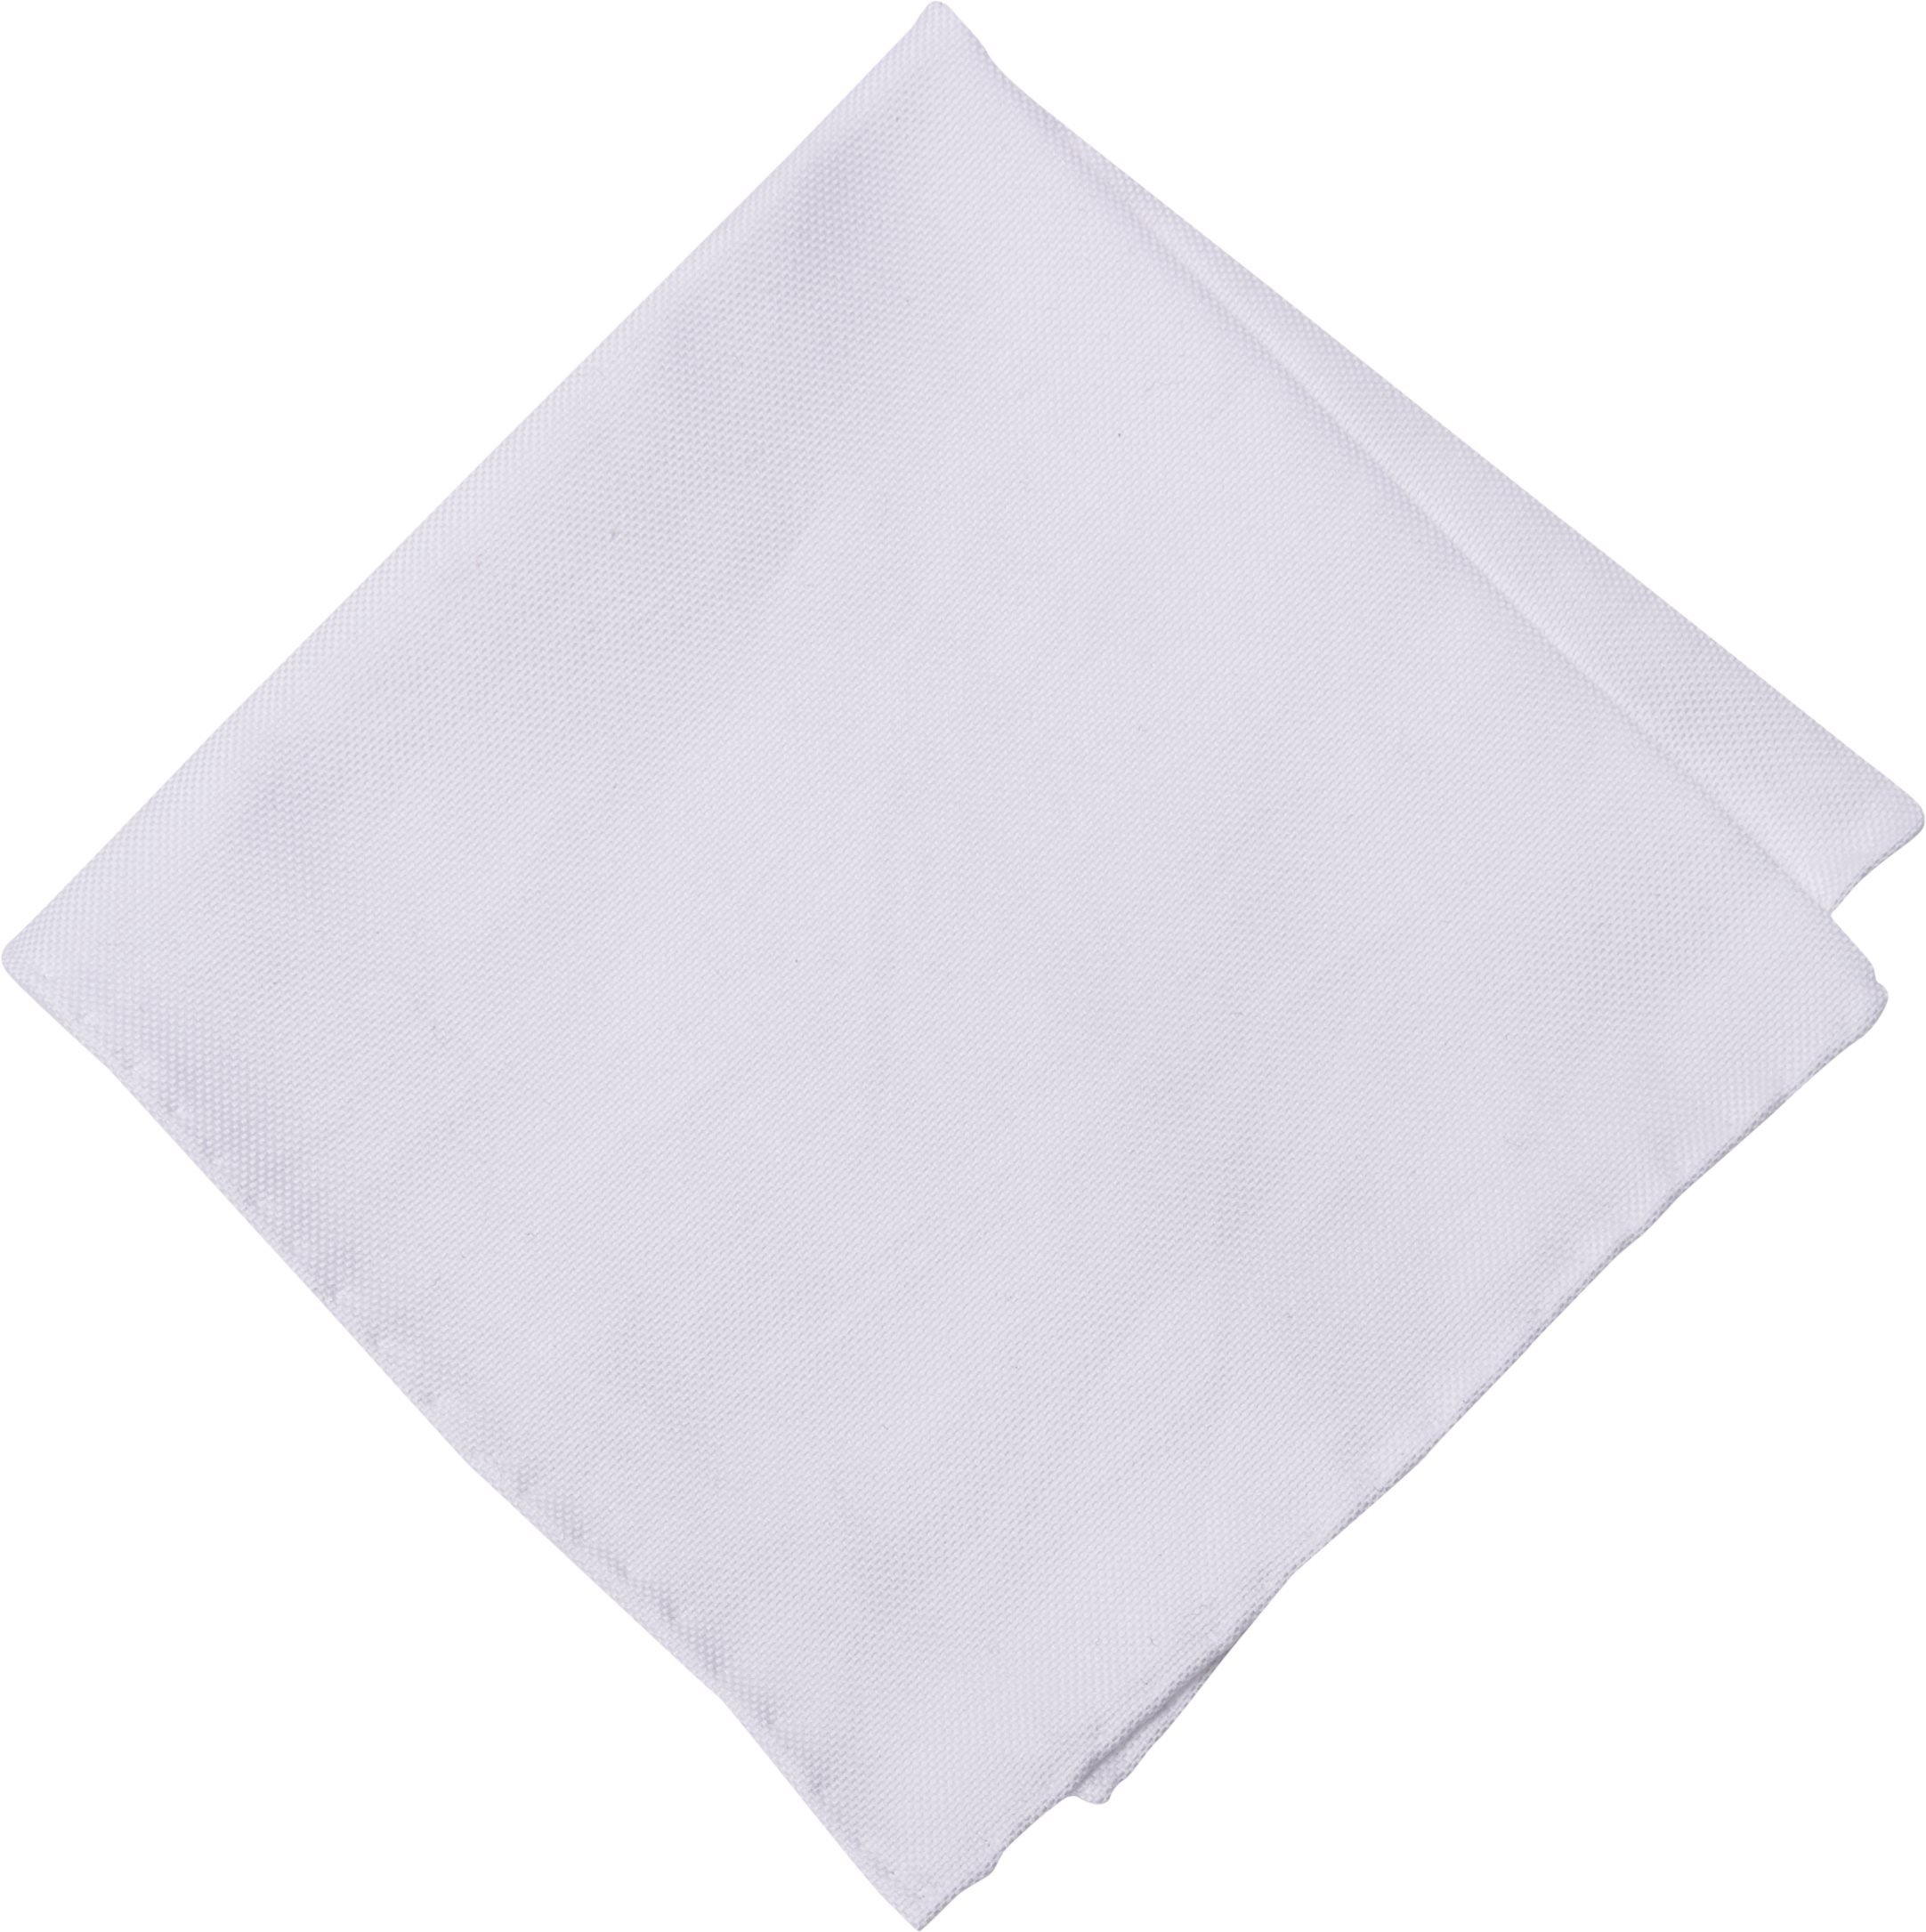 Handkerchief - Accessories - White